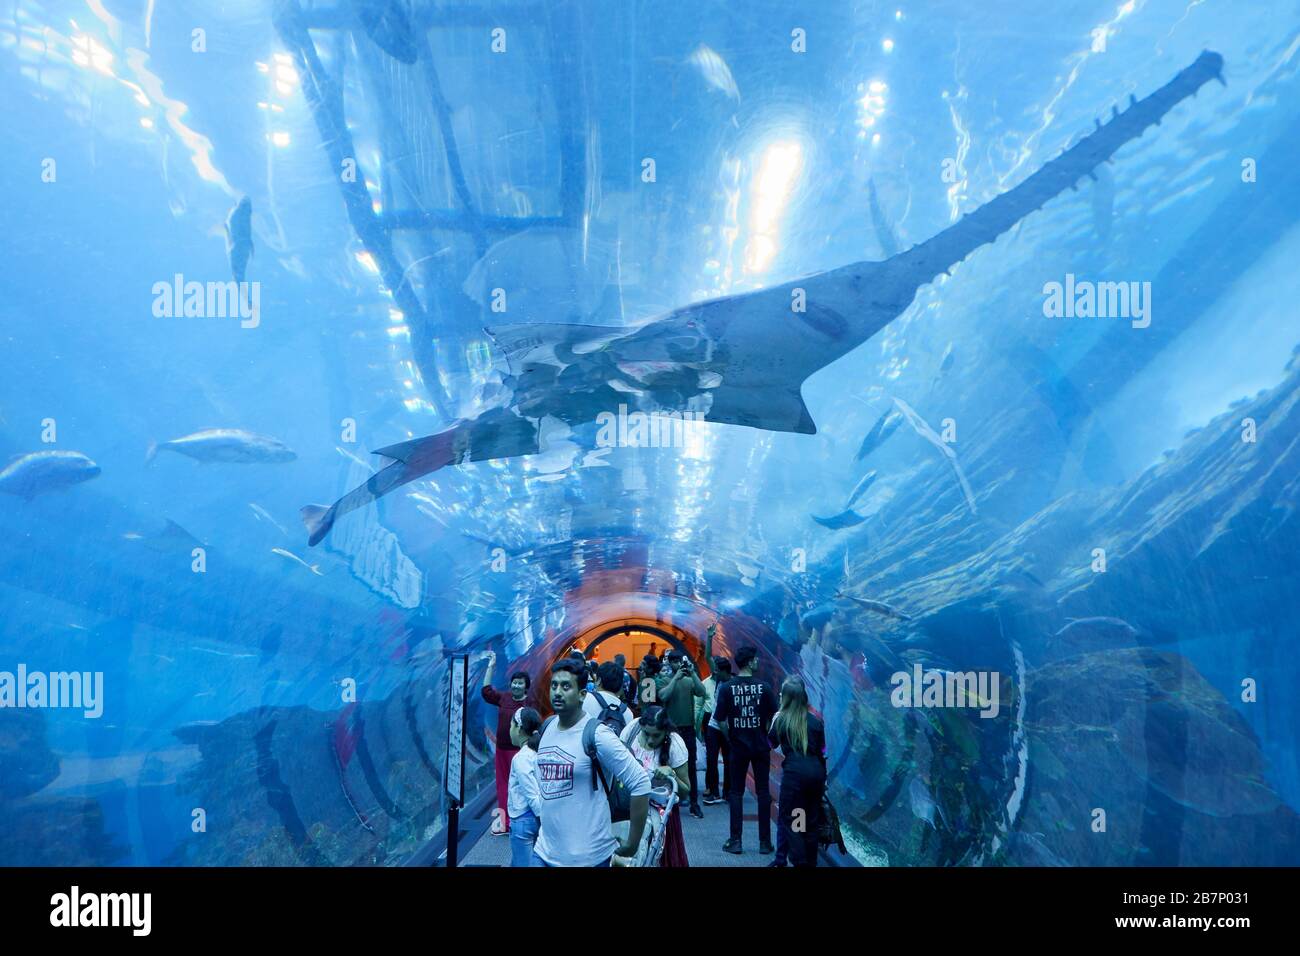 DUBAI, UNITED ARAB EMIRATES - NOVEMBER 21, 2019: Dubai Aquarium tunnel with people and tourists, sawfish low angle view Stock Photo